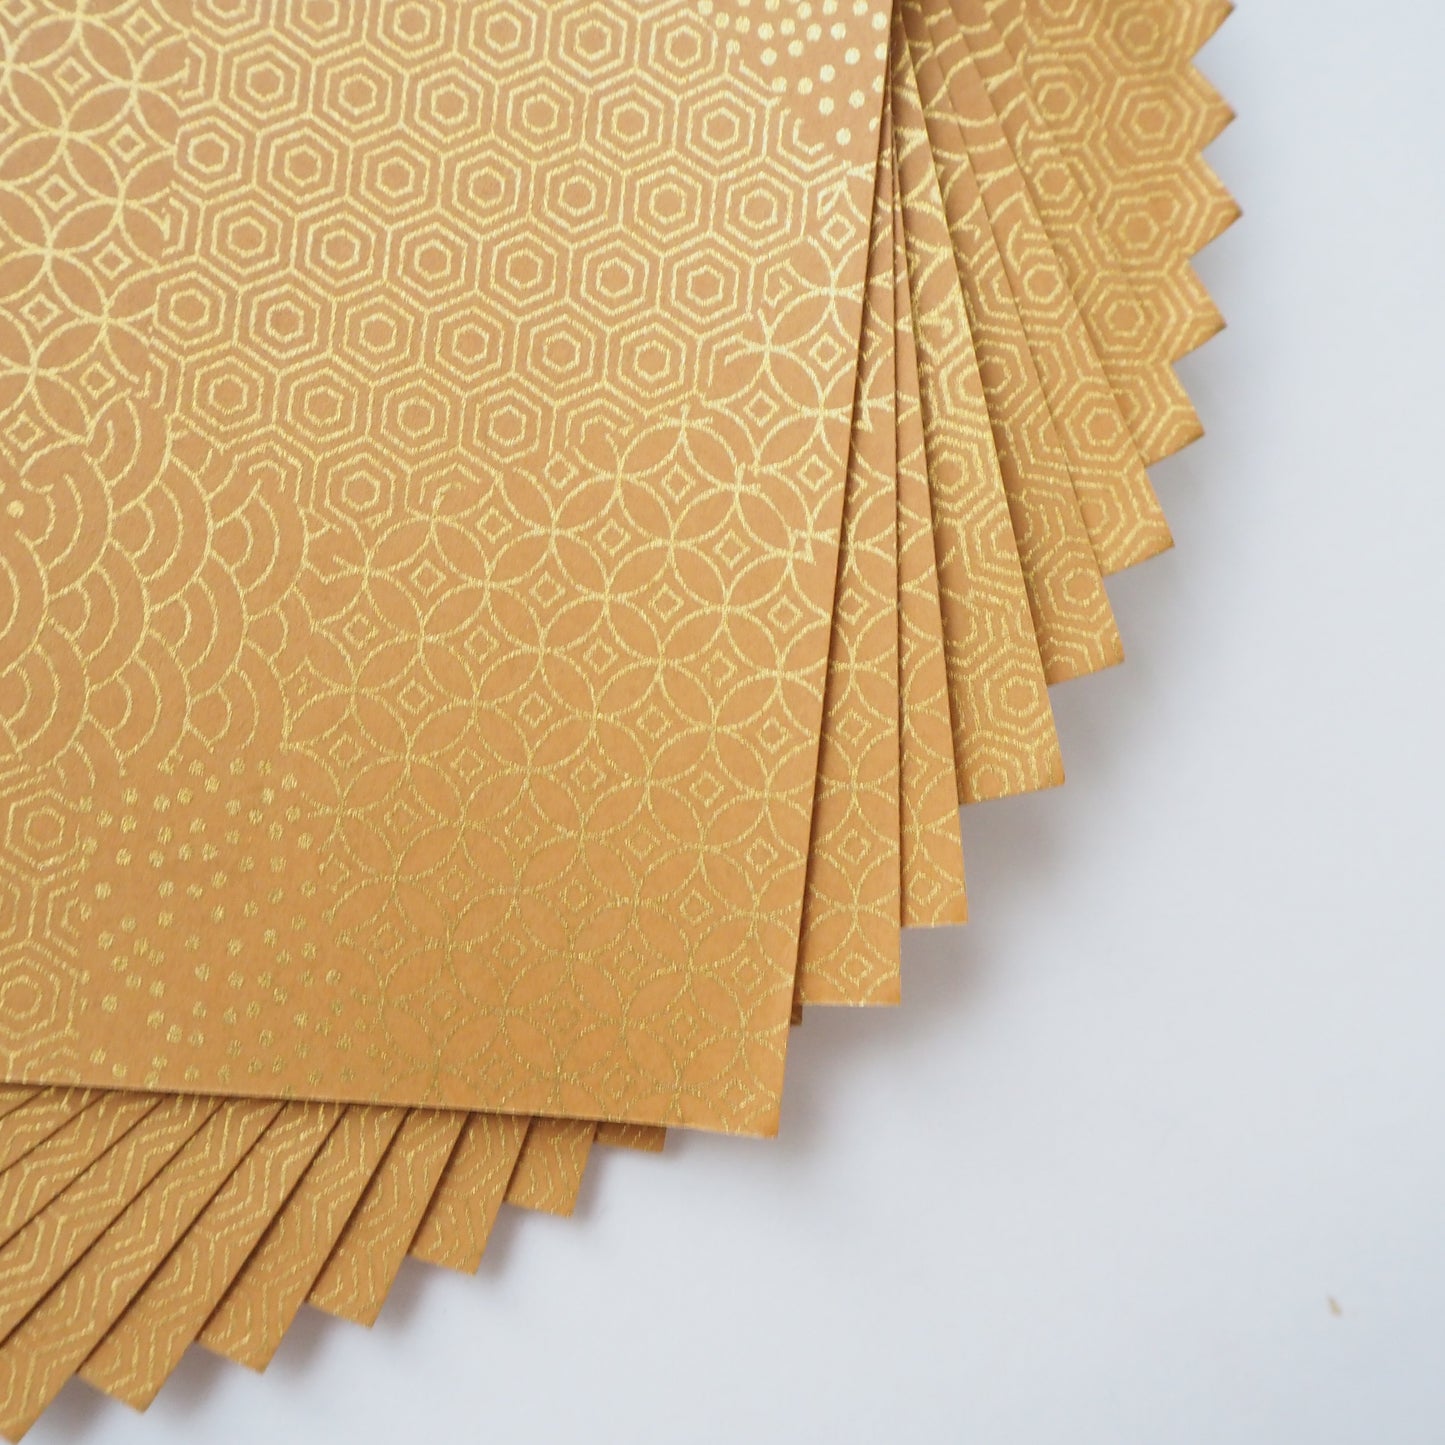 Pack of 20 Sheets 14x14cm Yuzen Washi Origami Paper HZ-494 - Blown Gold Mixed Geometric Patterns